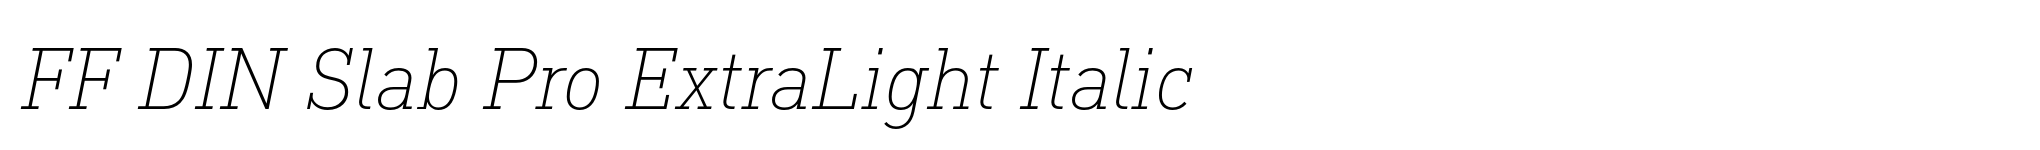 FF DIN Slab Pro ExtraLight Italic image